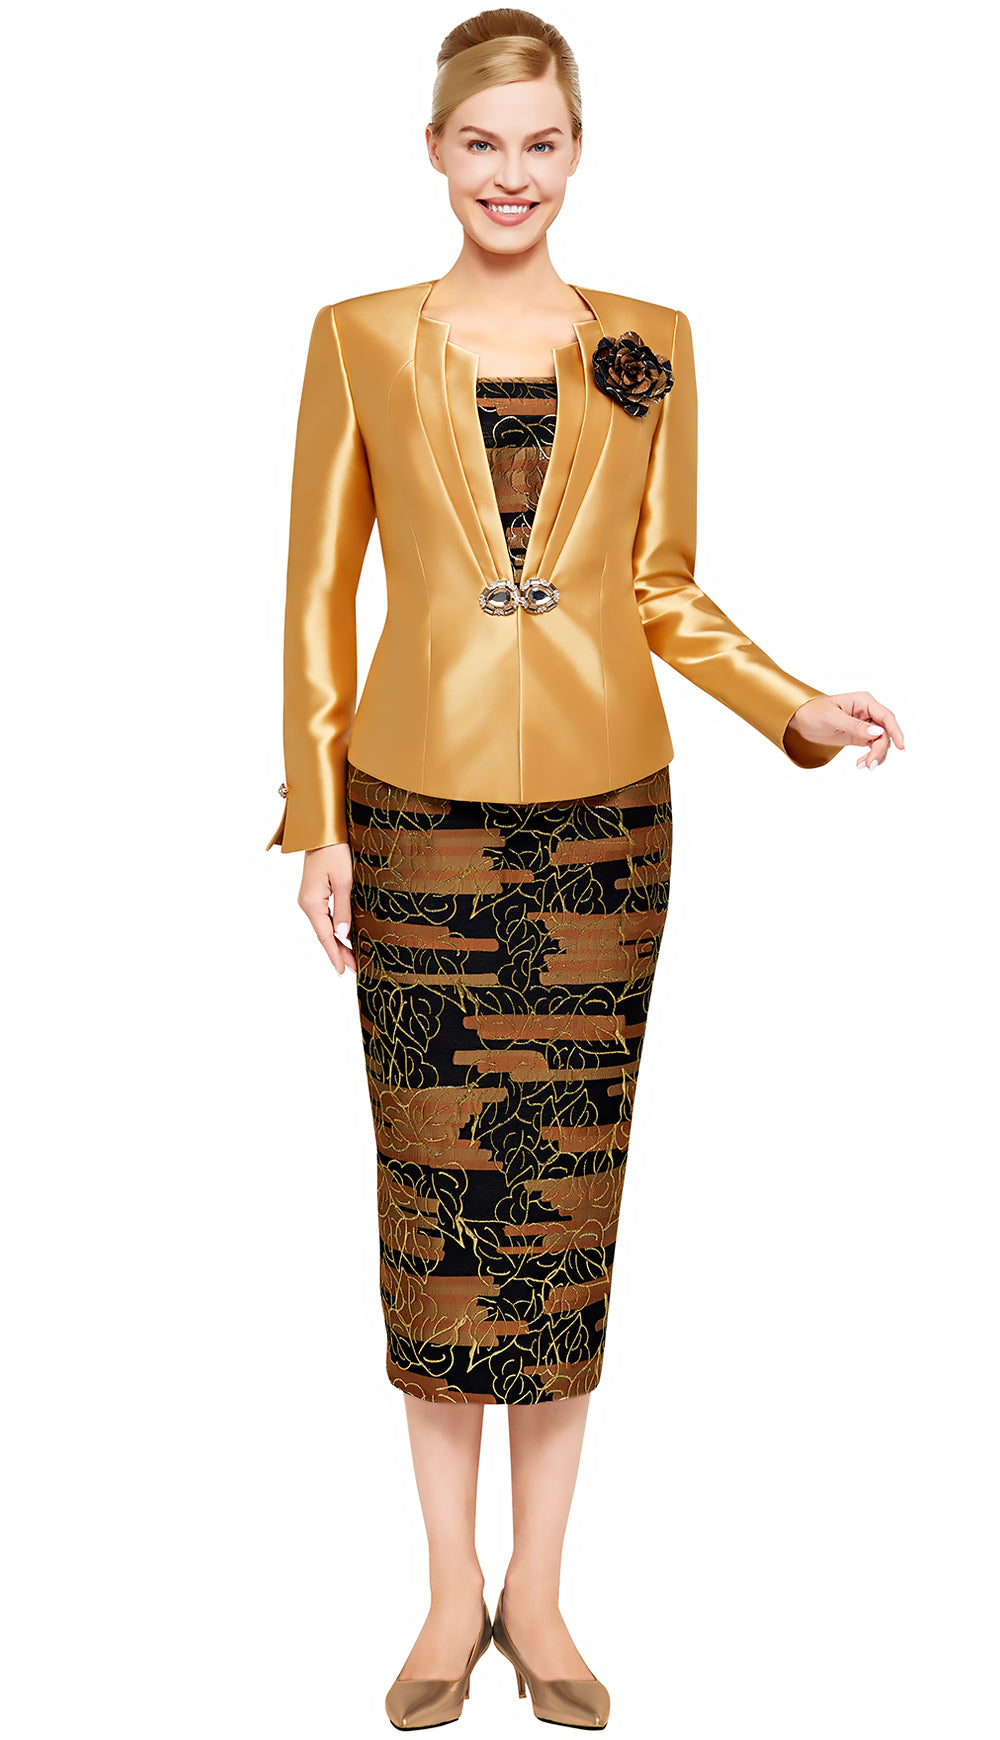 Nina Massini Church Suit 3067 - Church Suits For Less